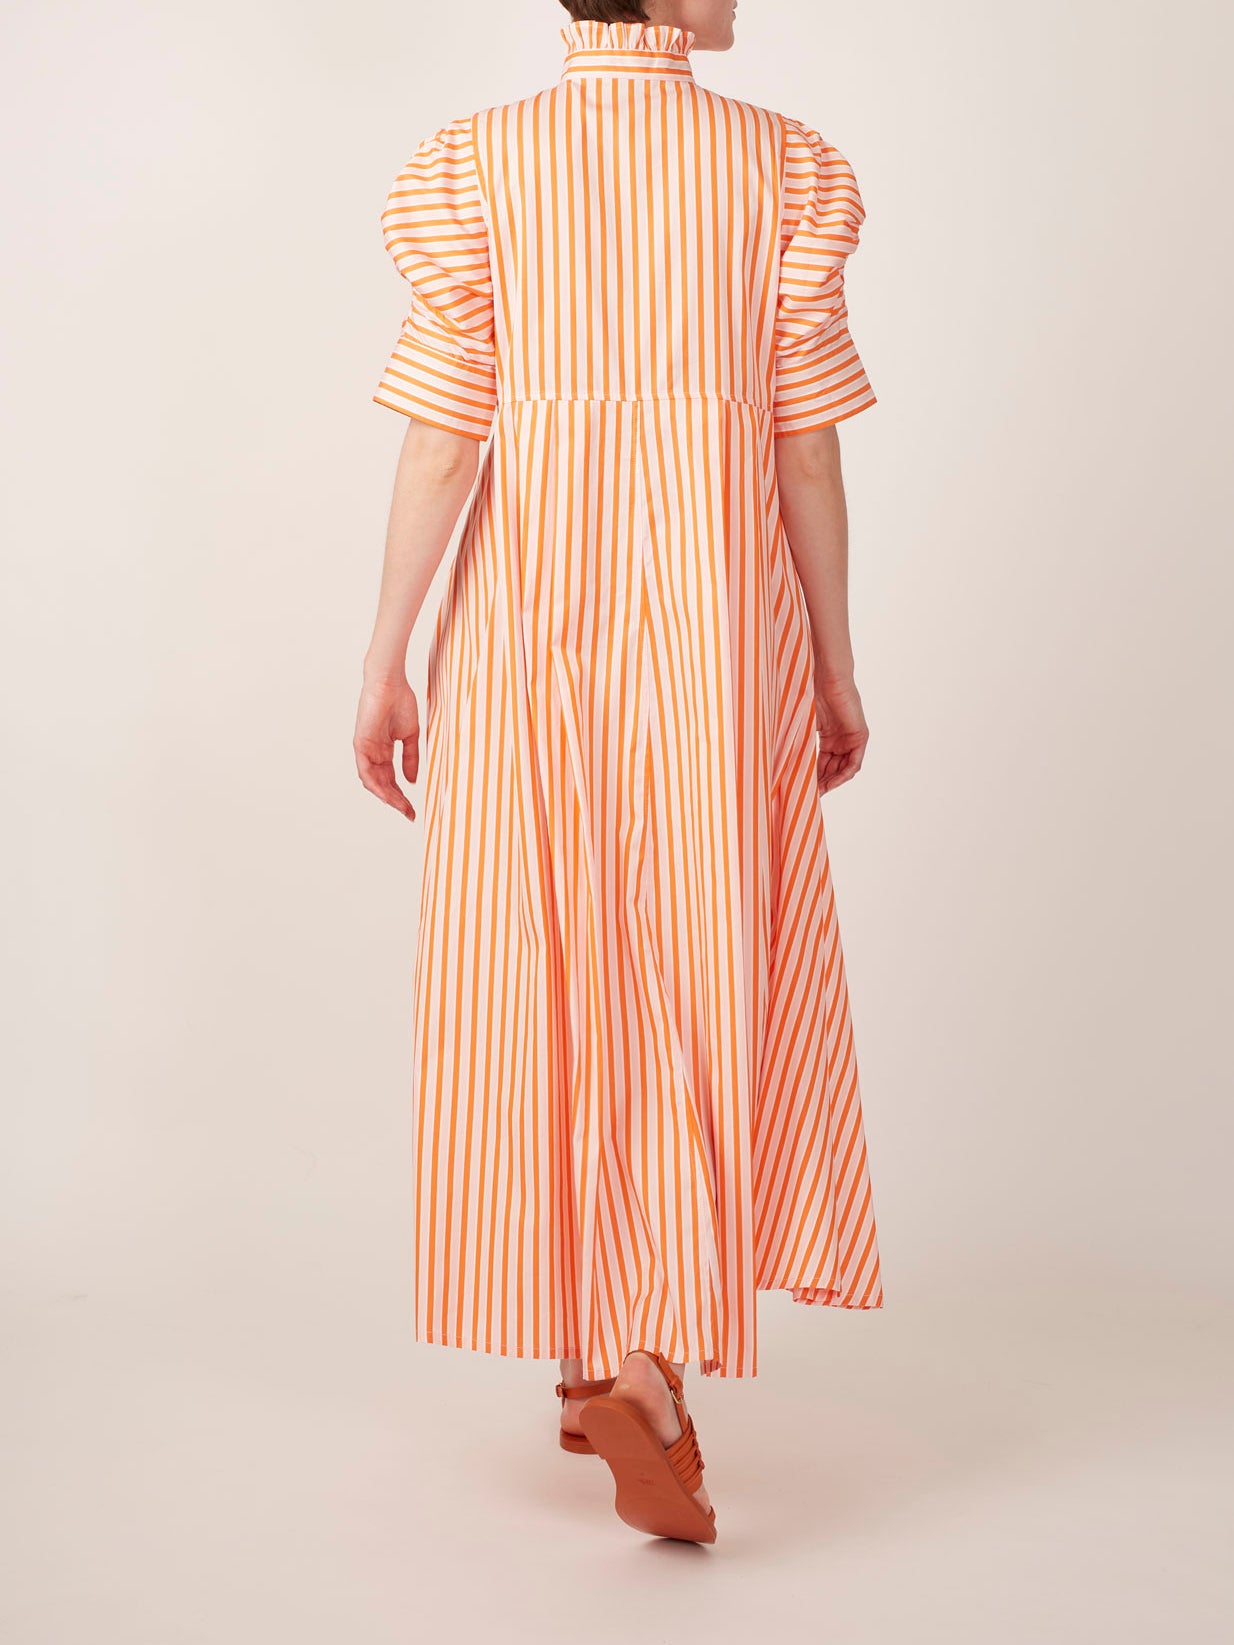 Back view of Venetia Mayfair - Orange, Salmon & White Dress by Thierry Colson